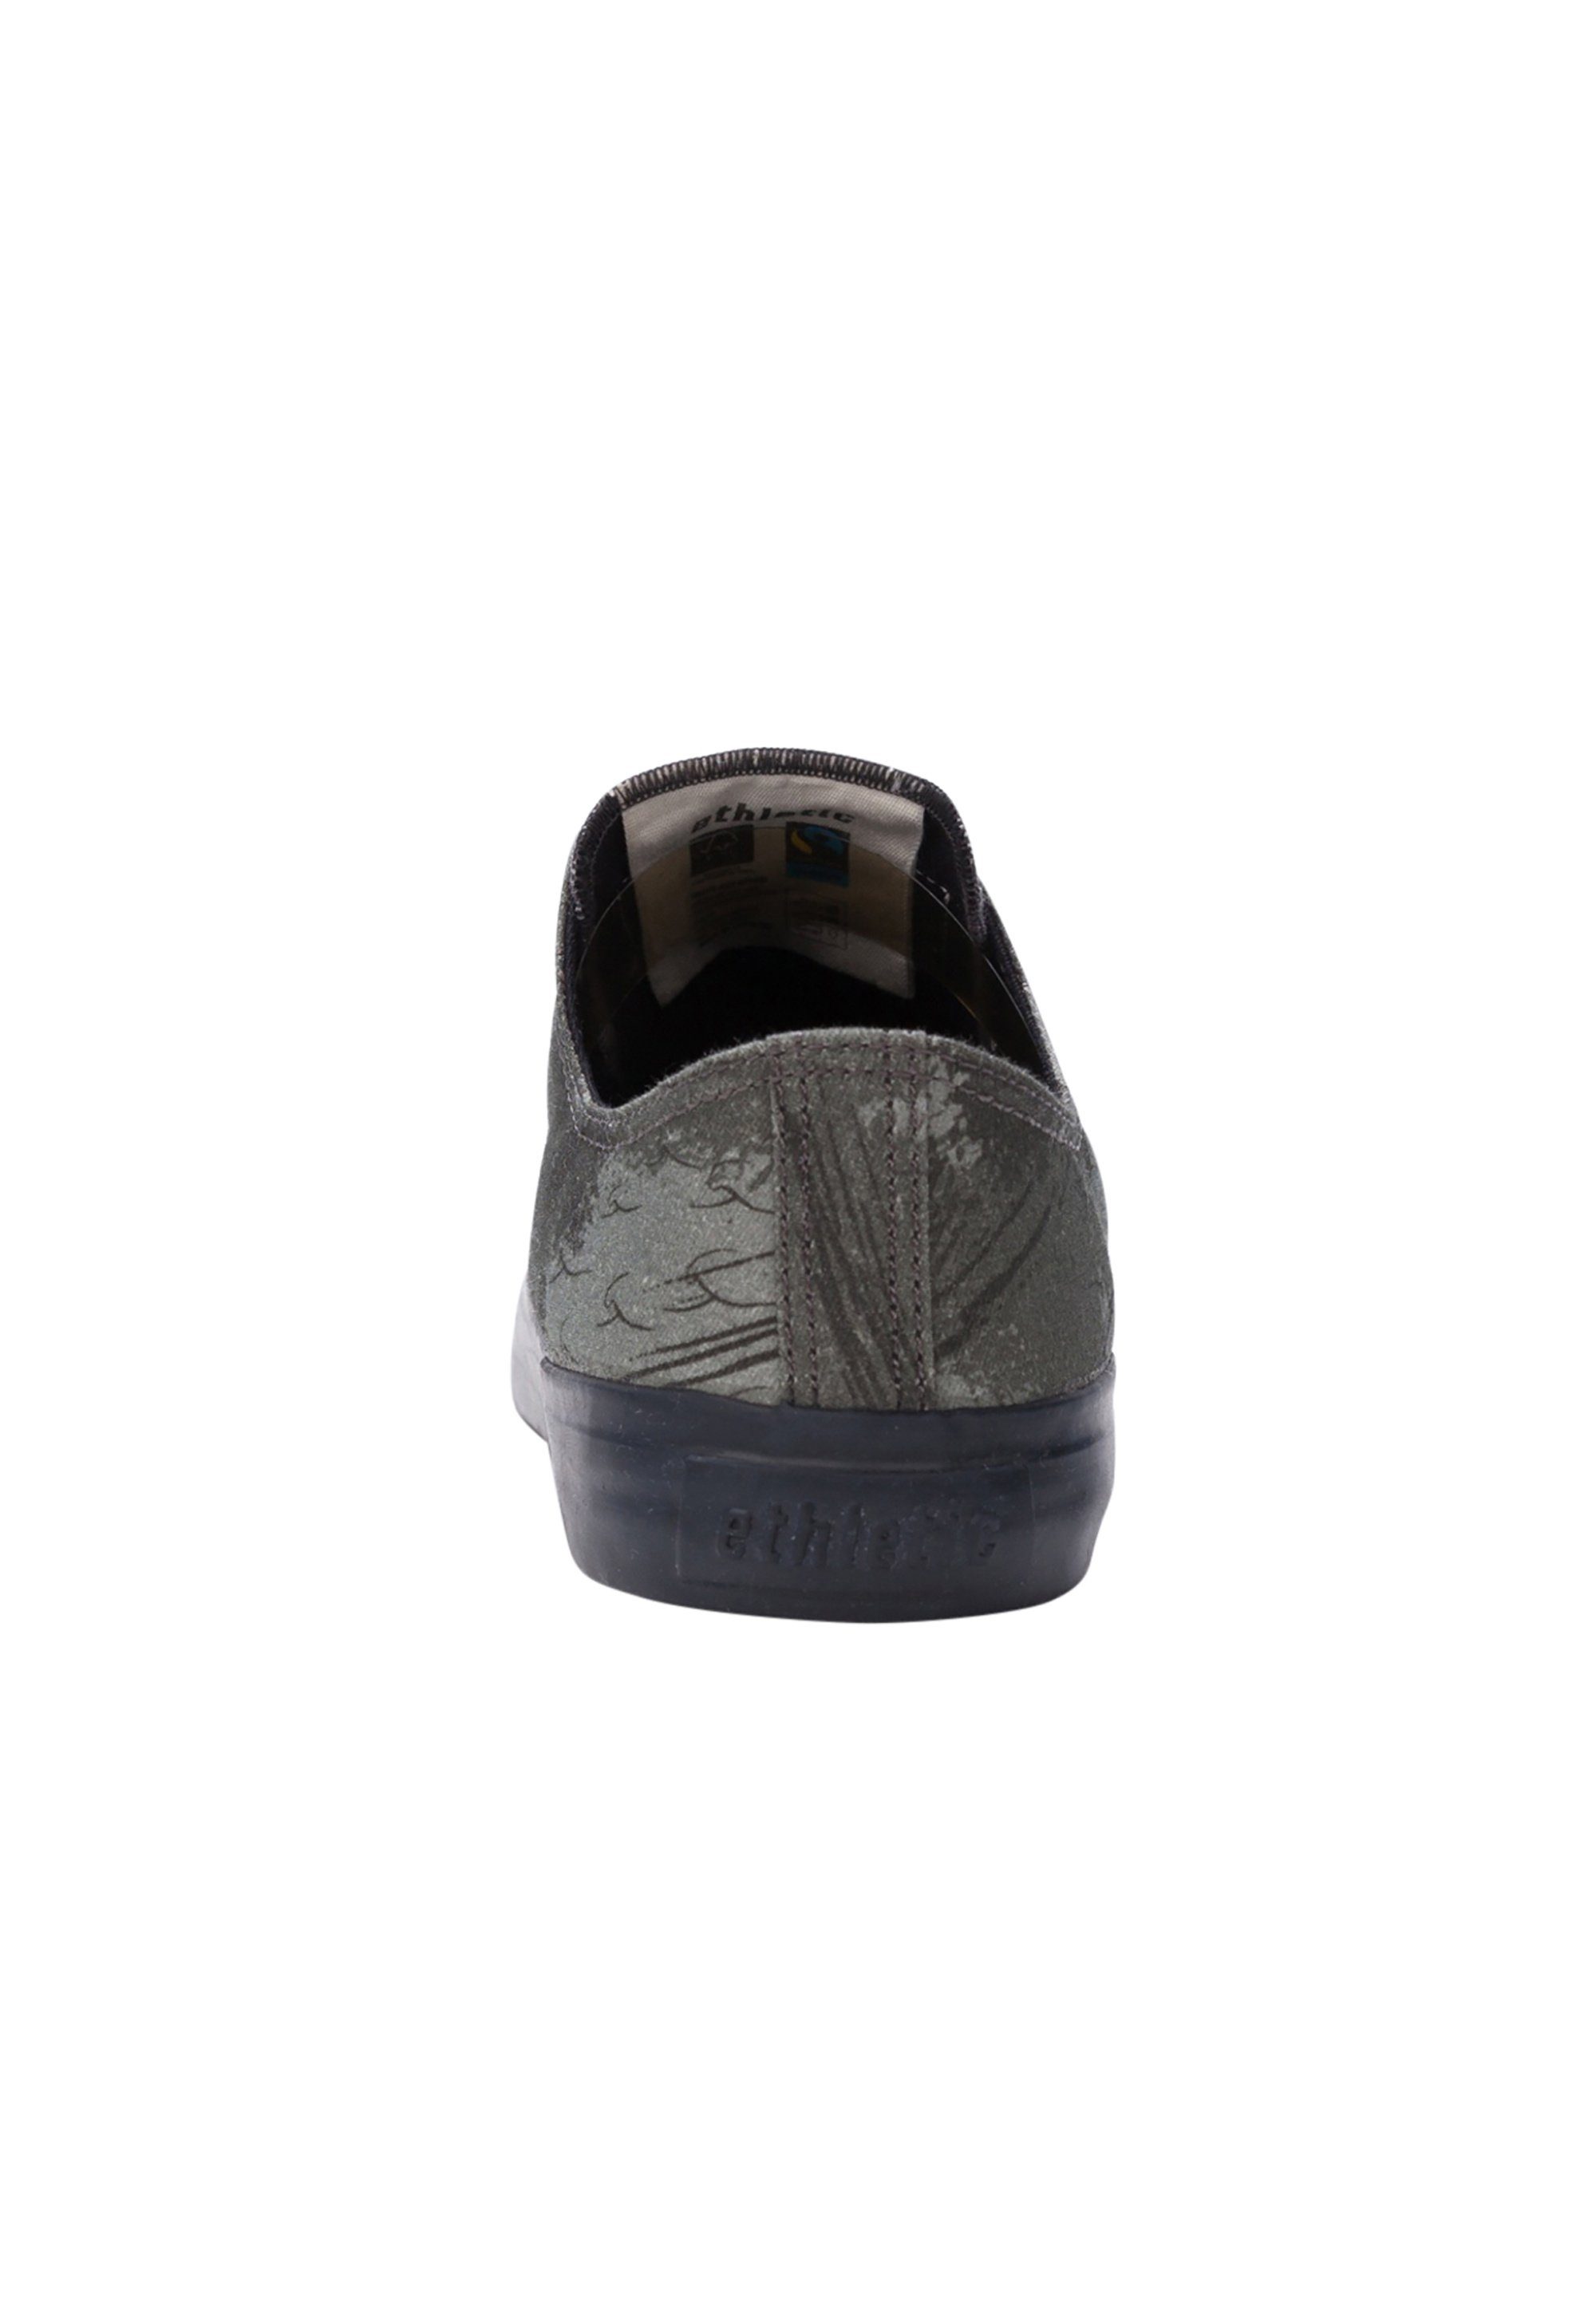 Produkt Black camo olive Fairtrade Cap dove black Lo ETHLETIC Cut jet Sneaker